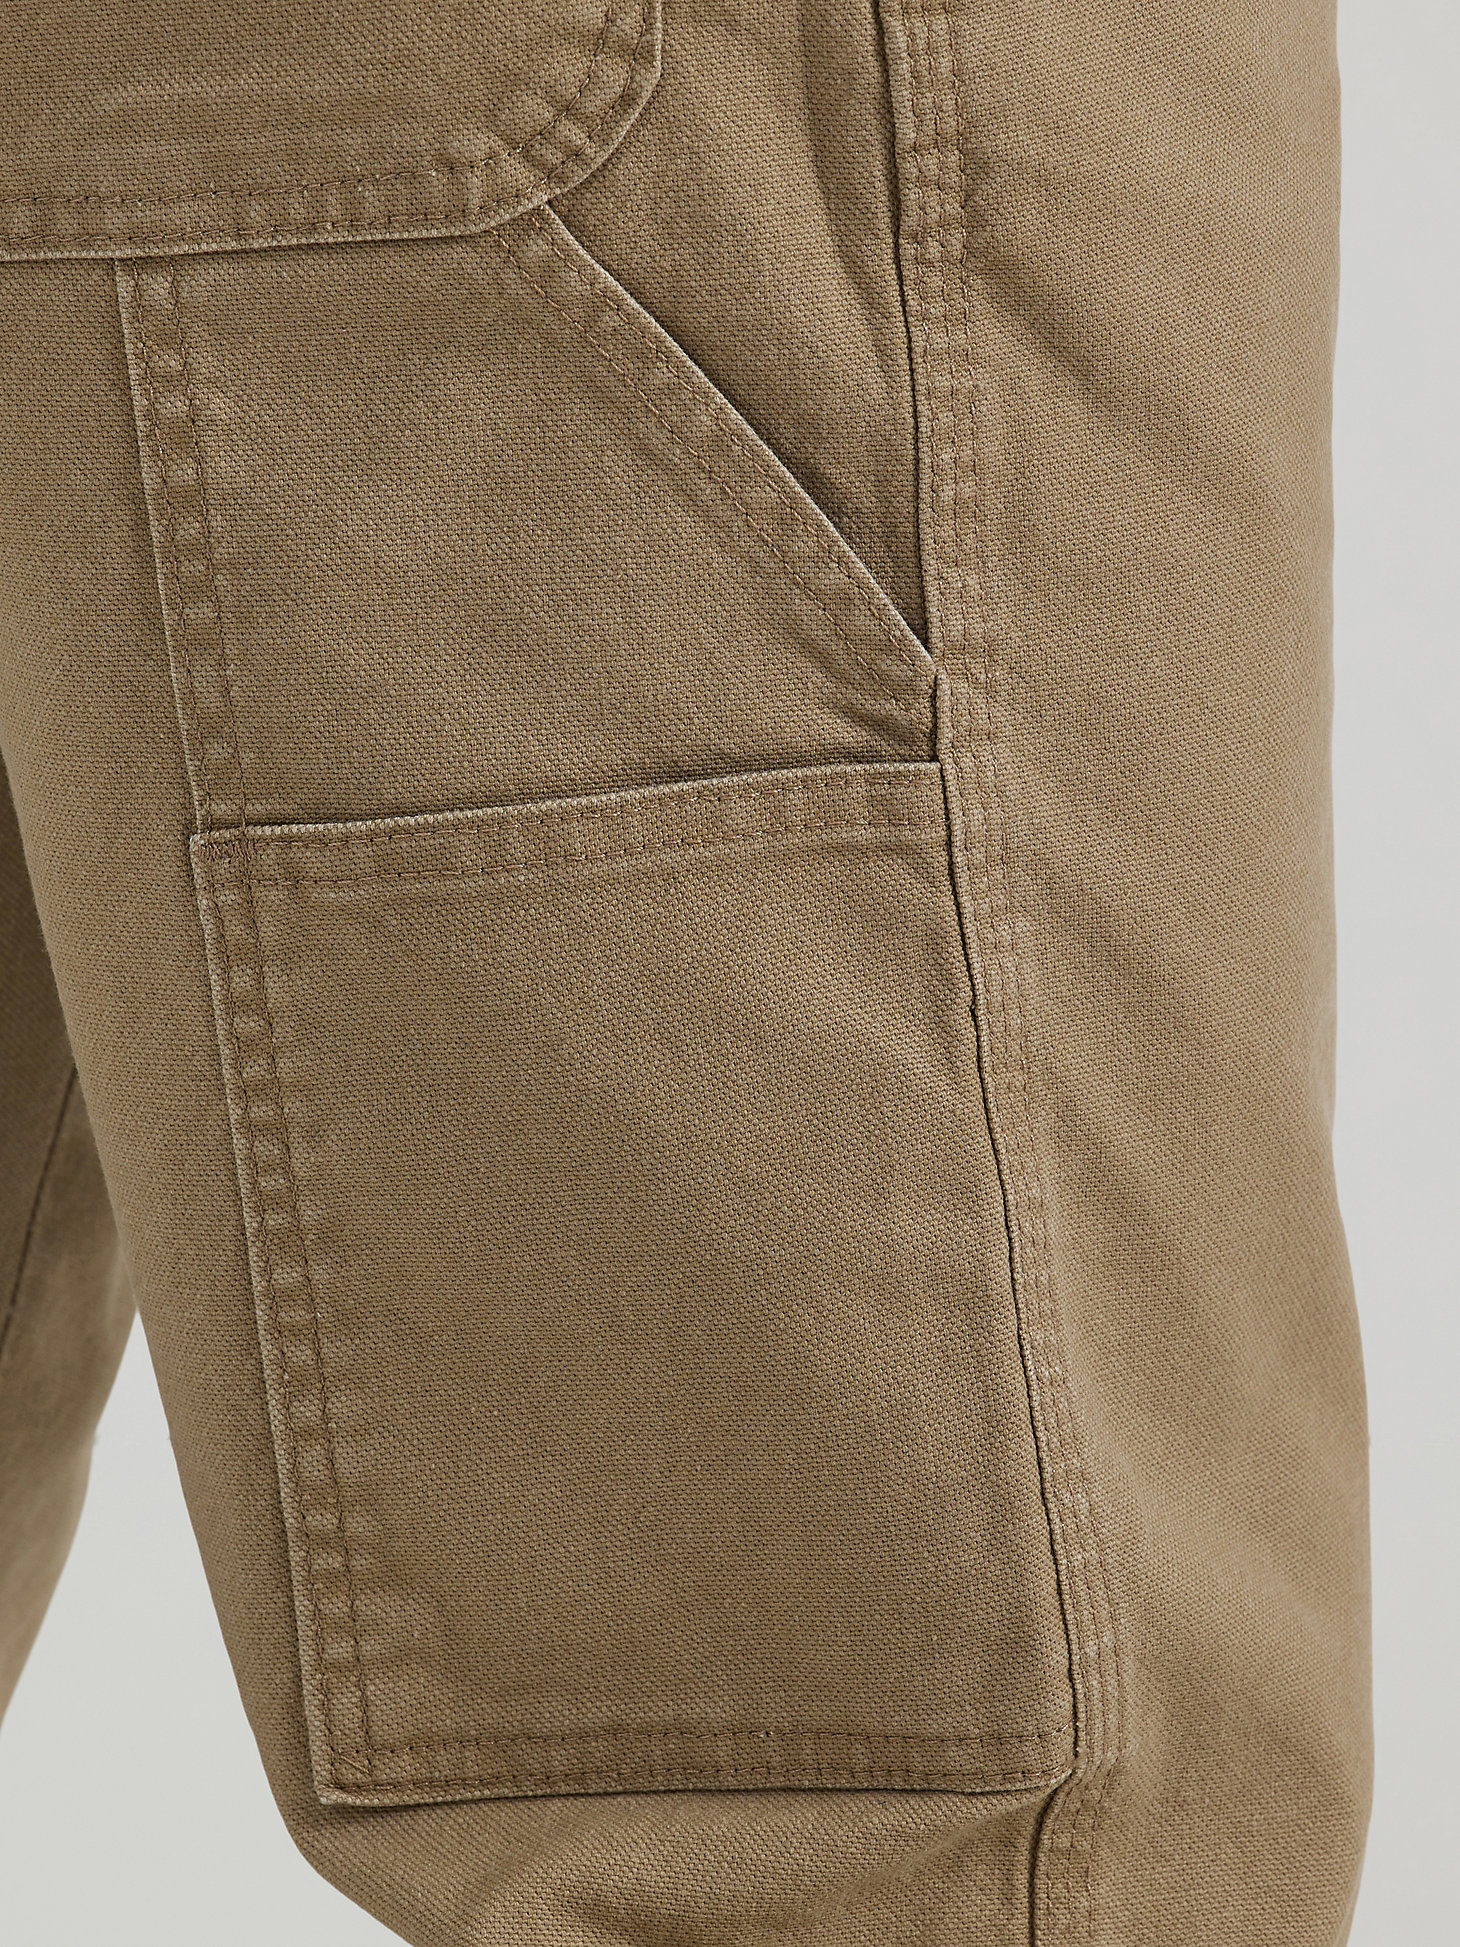 Wrangler® Men's Five Star Premium Carpenter Jean in Khaki Canvas alternative view 6